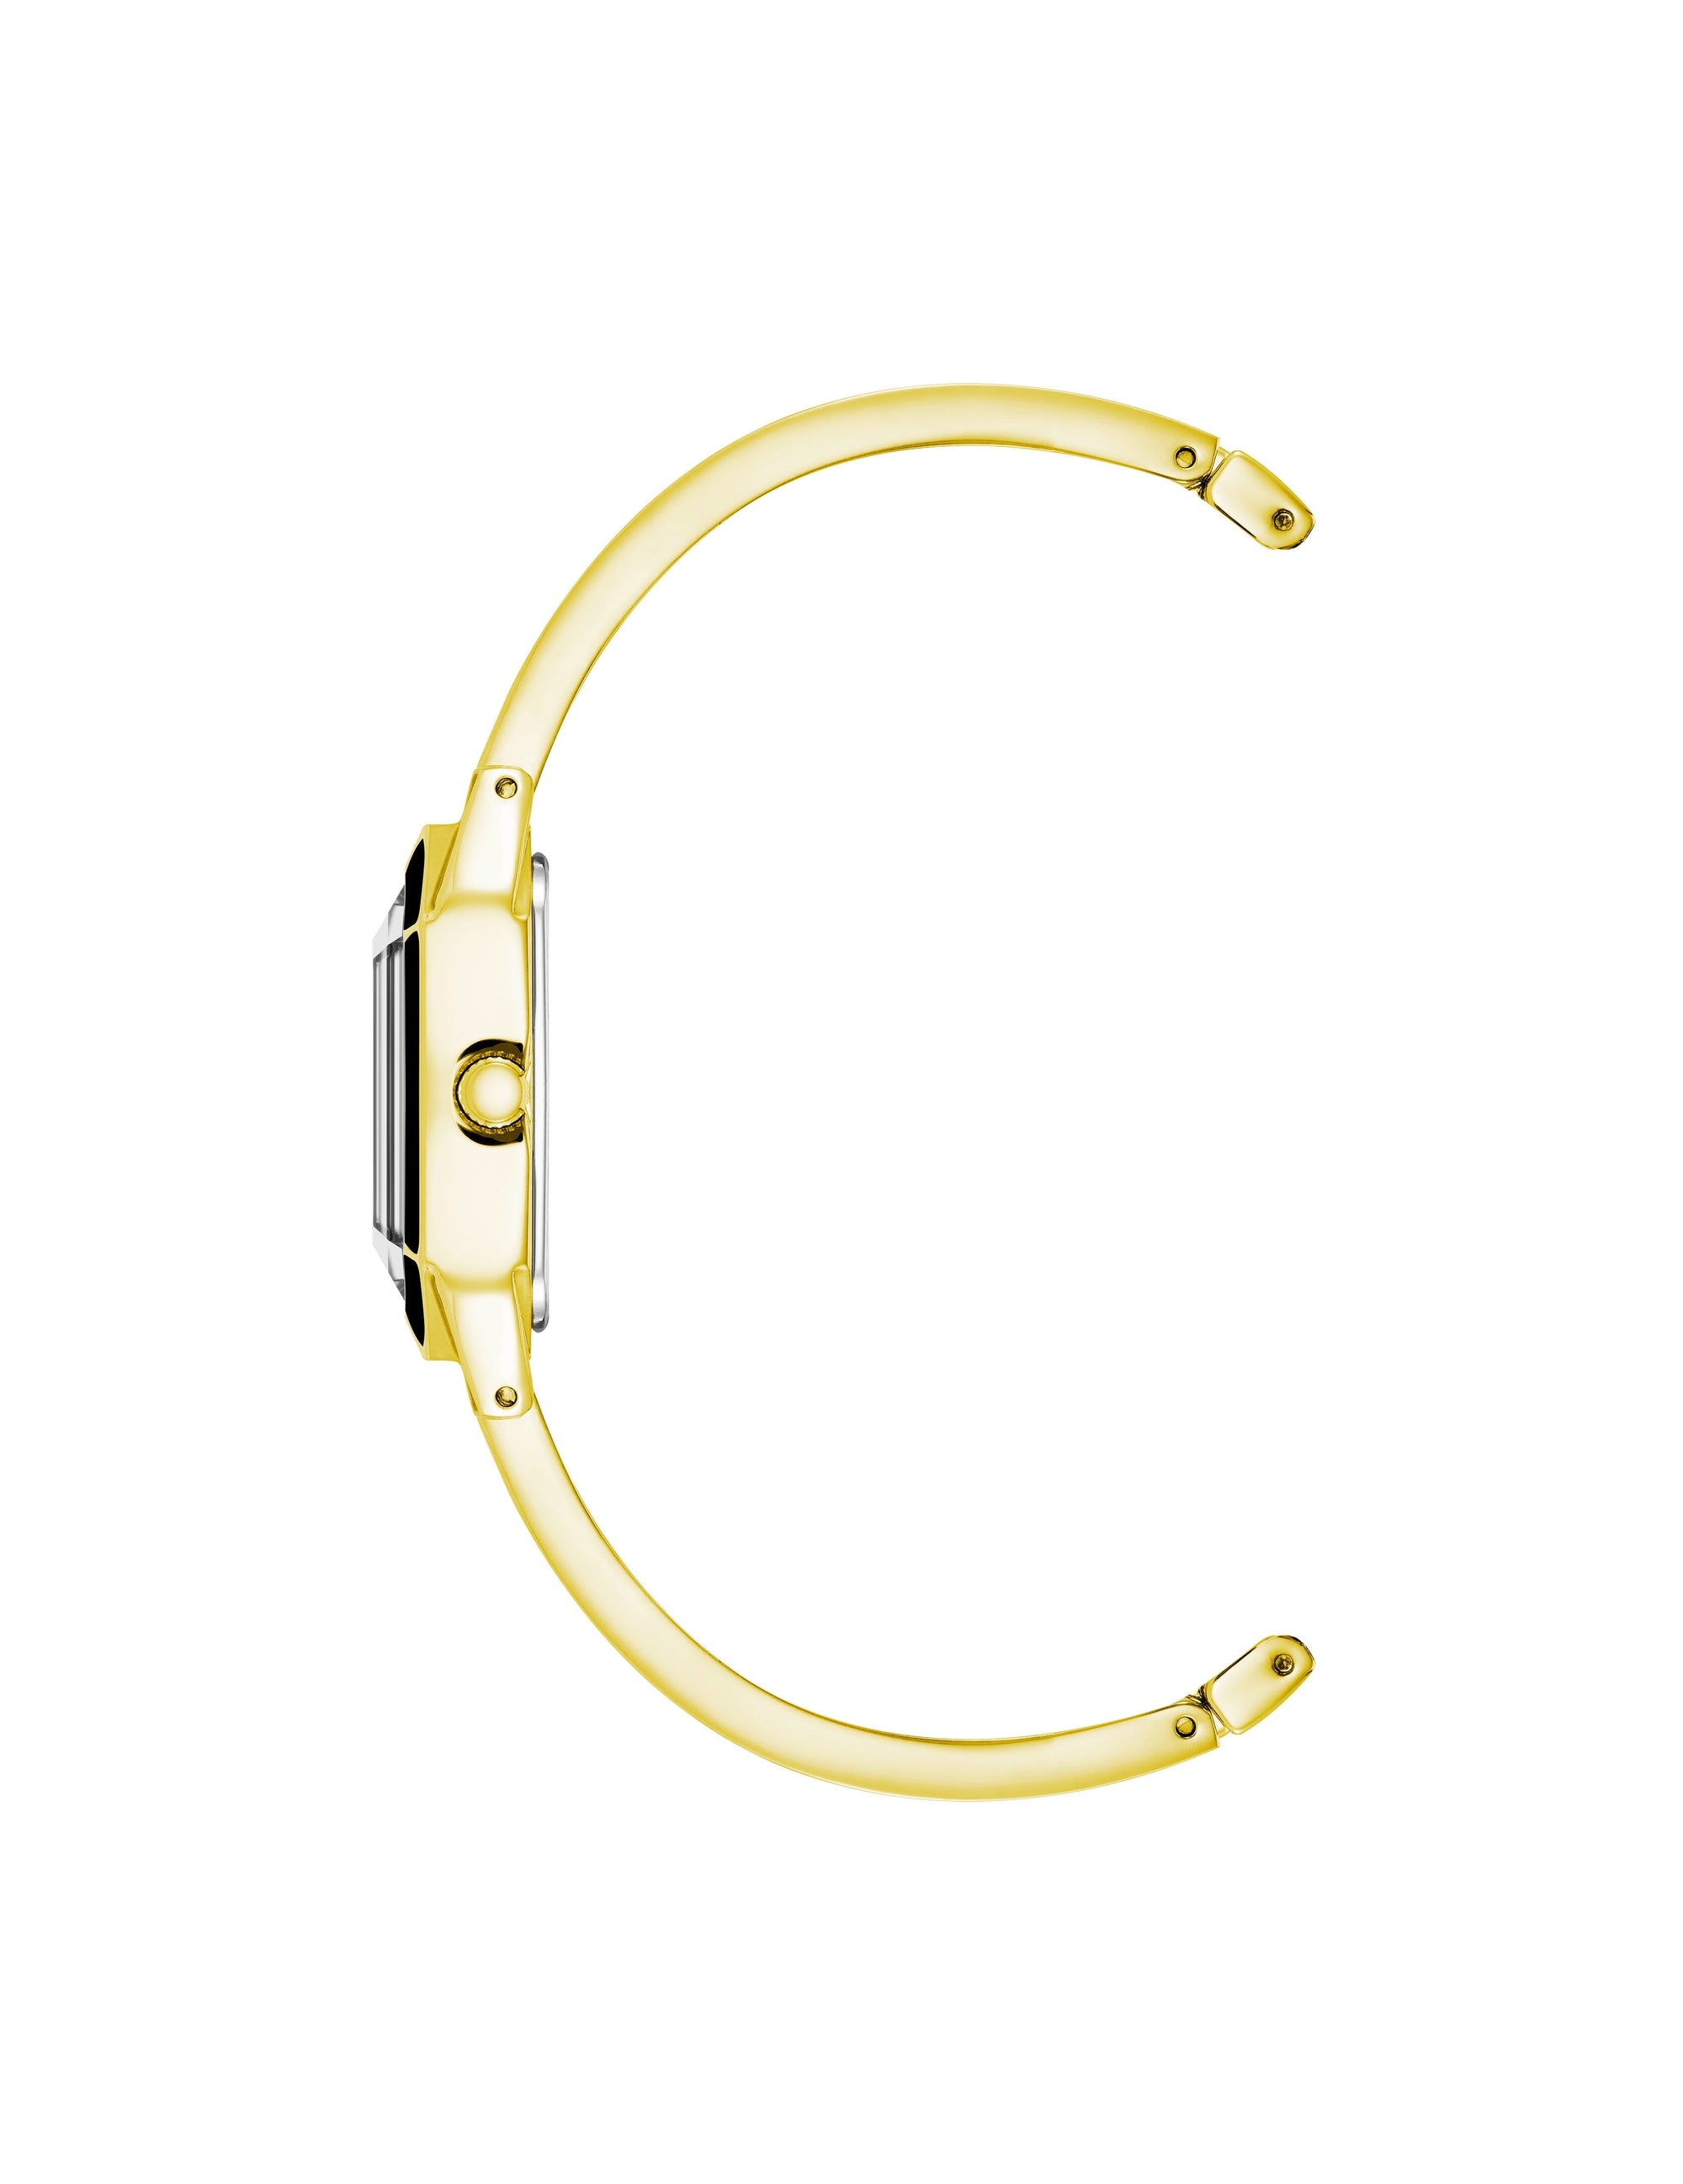 Anne Klein Black/ Gold Tone Elegant Bangle Bracelet Watch